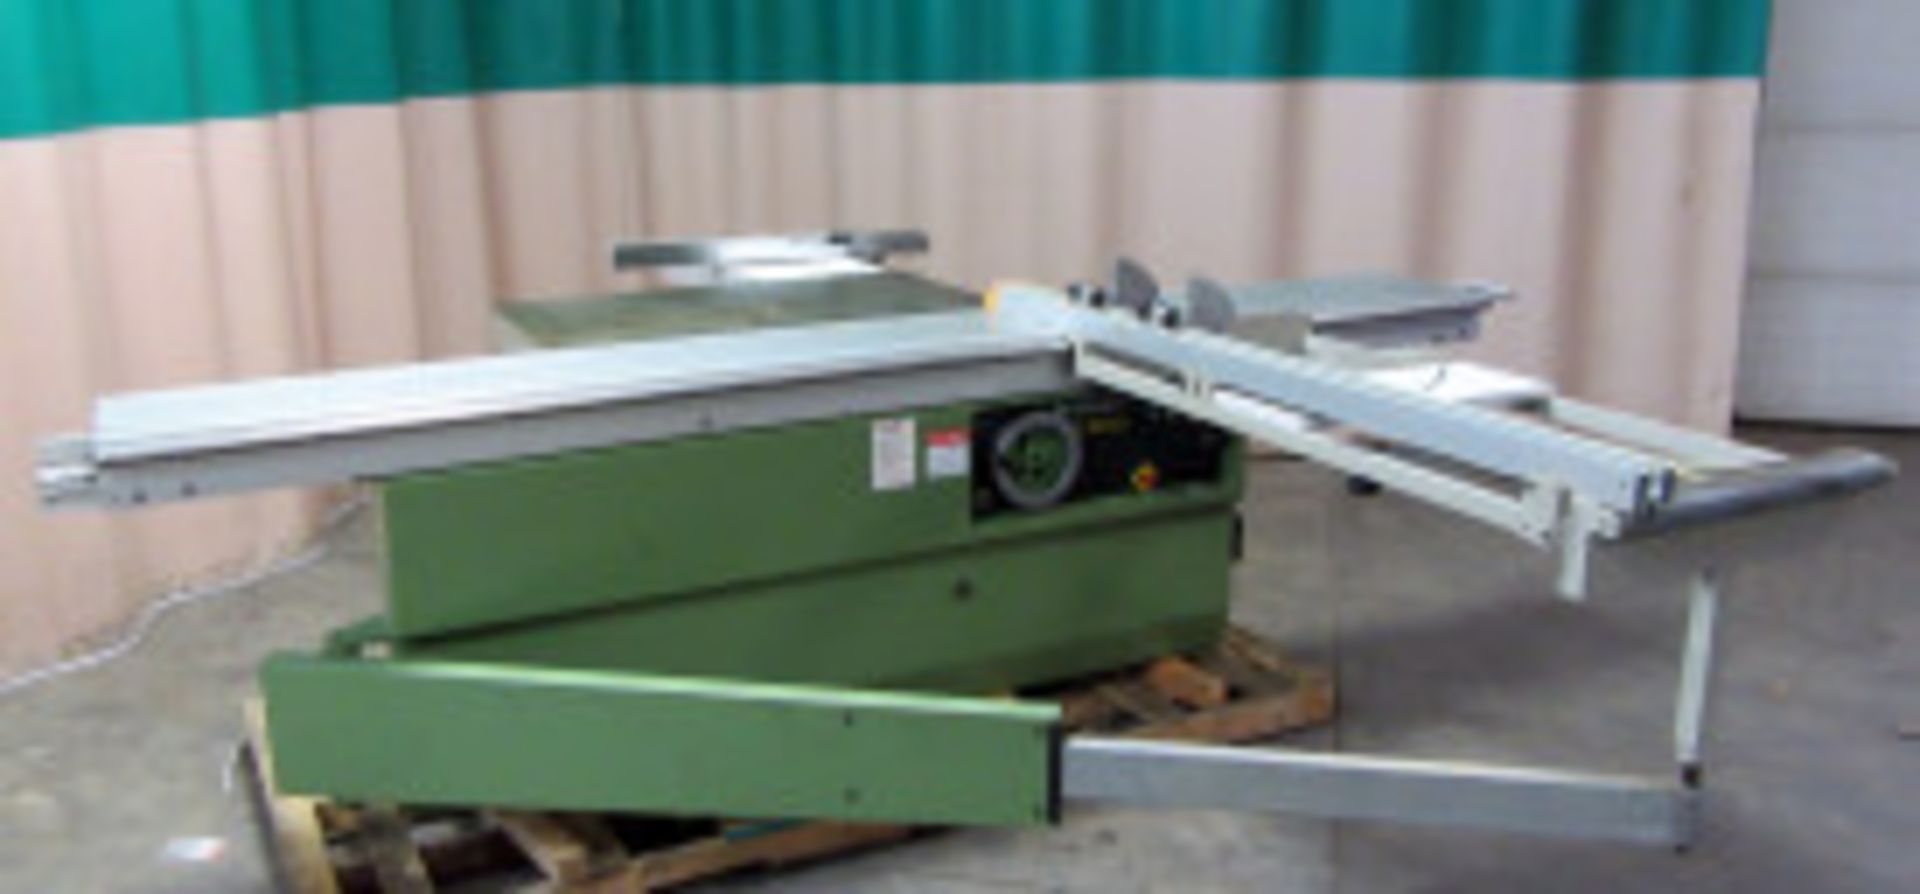 (8153) Griggio Model SC-3000 sliding table saw - Image 2 of 10